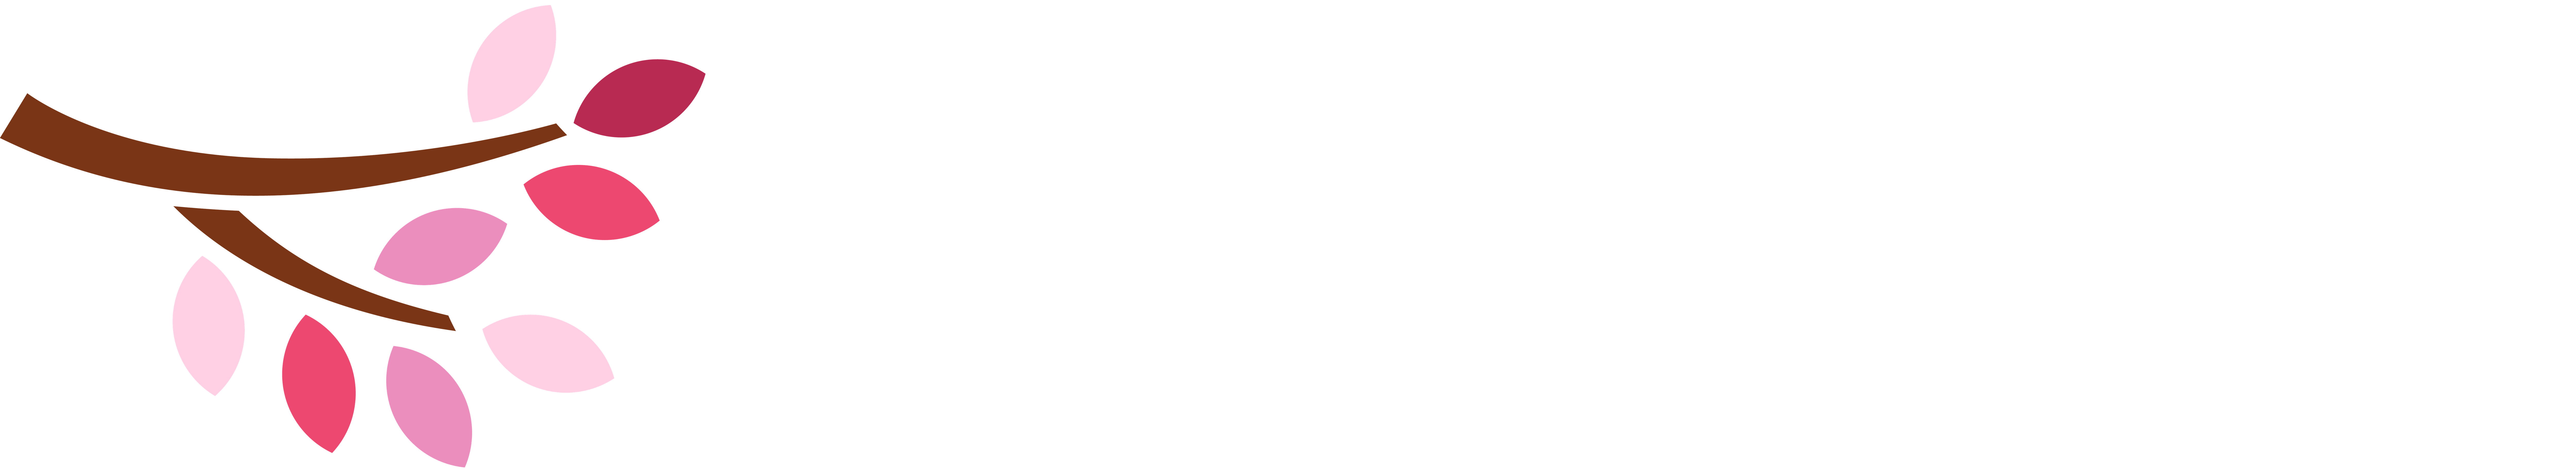 CoralTree Logo - WHITE